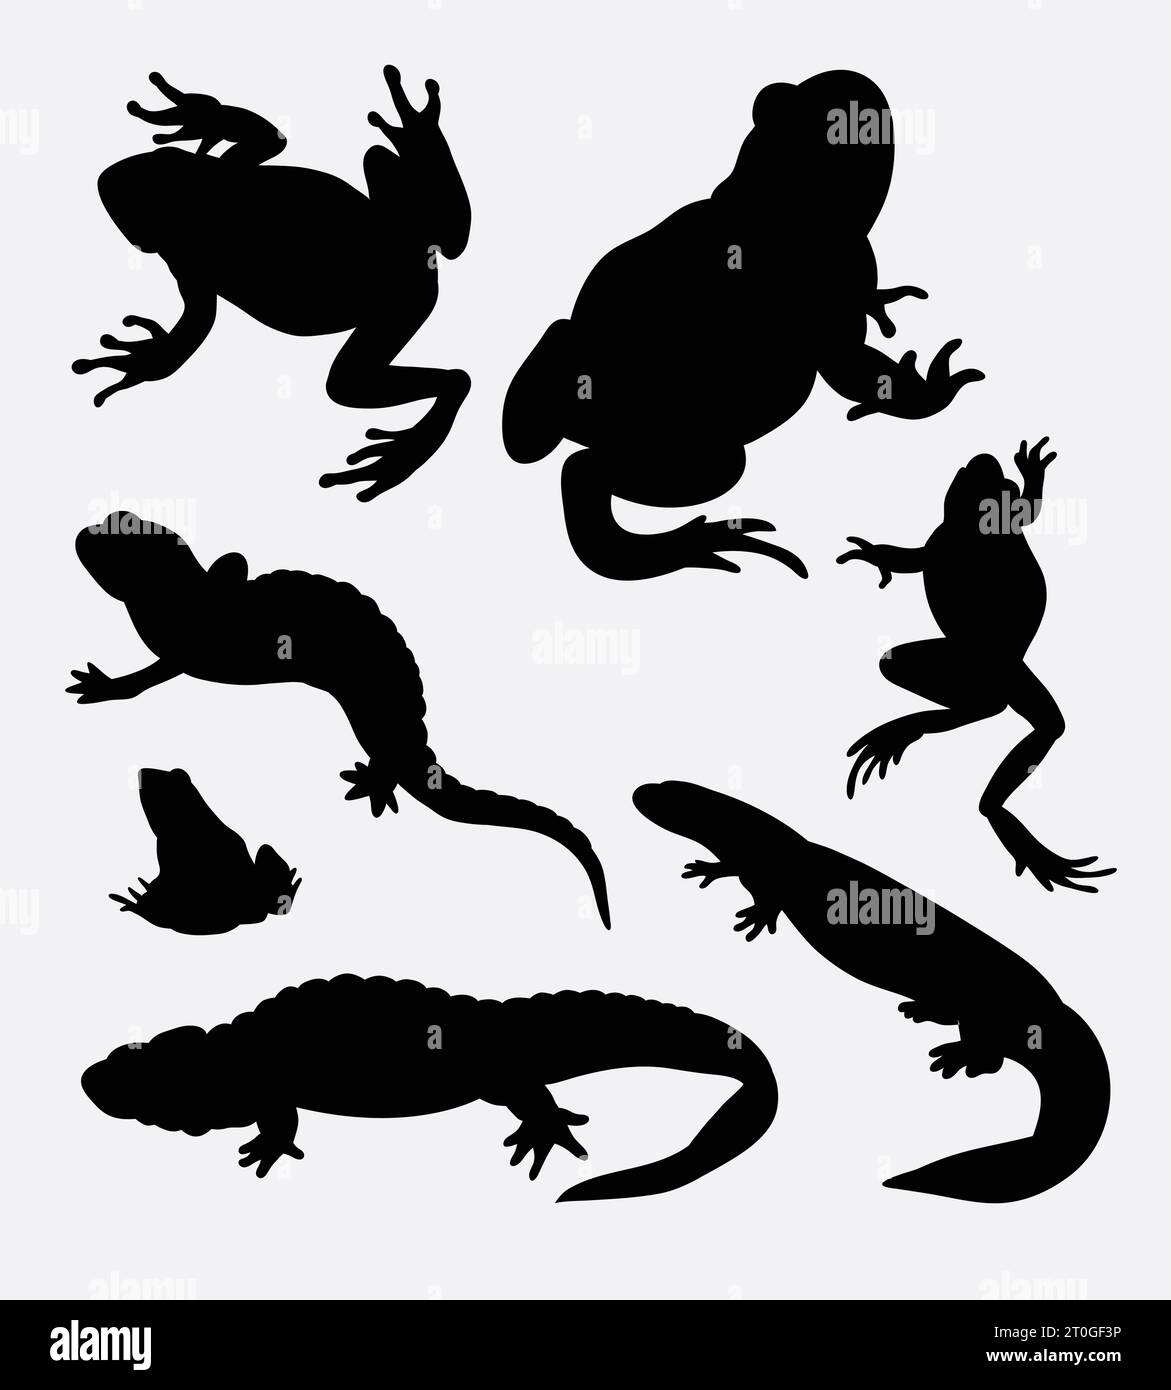 frog lizard amphibian reptilian animal silhouette Stock Vector